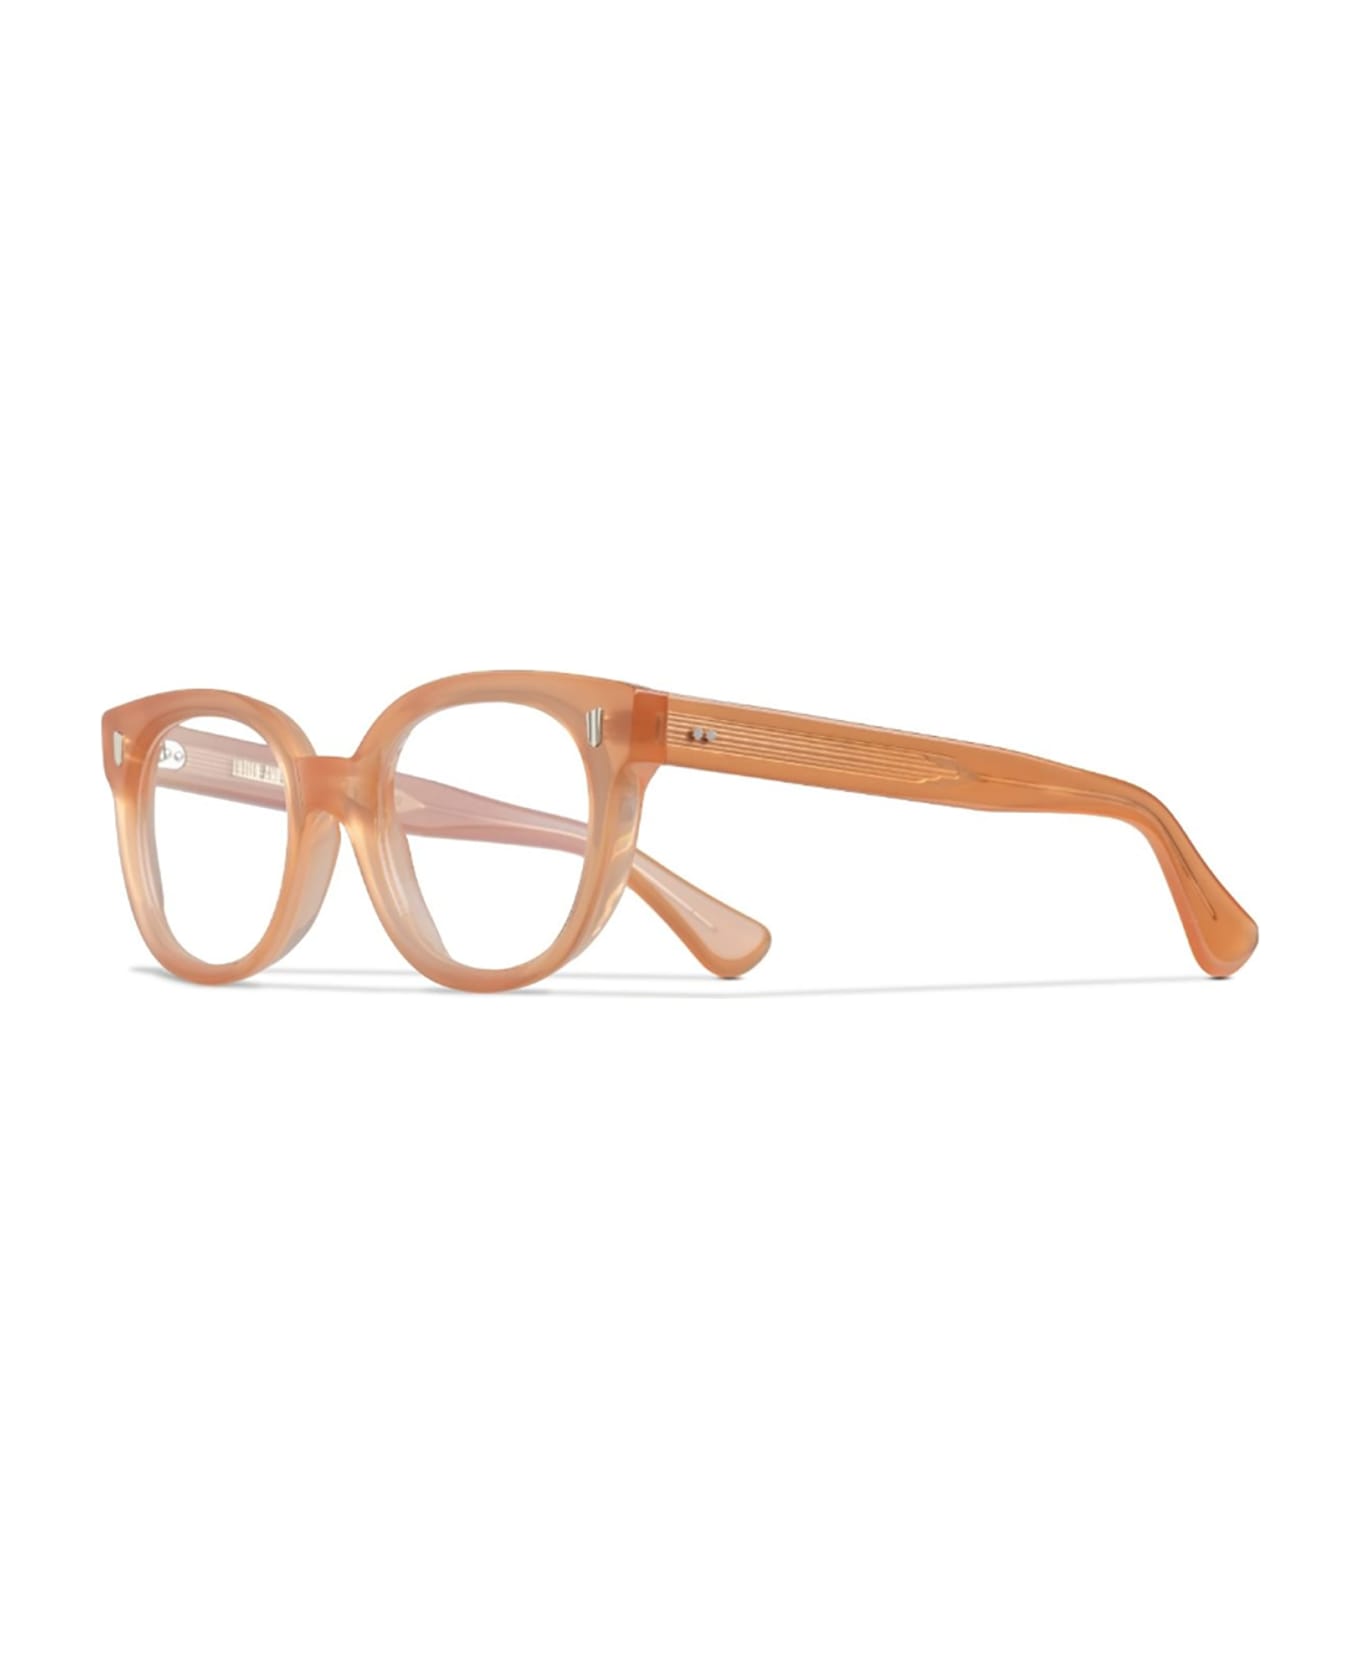 Cutler and Gross 9298 Eyewear - Opal Peach アイウェア